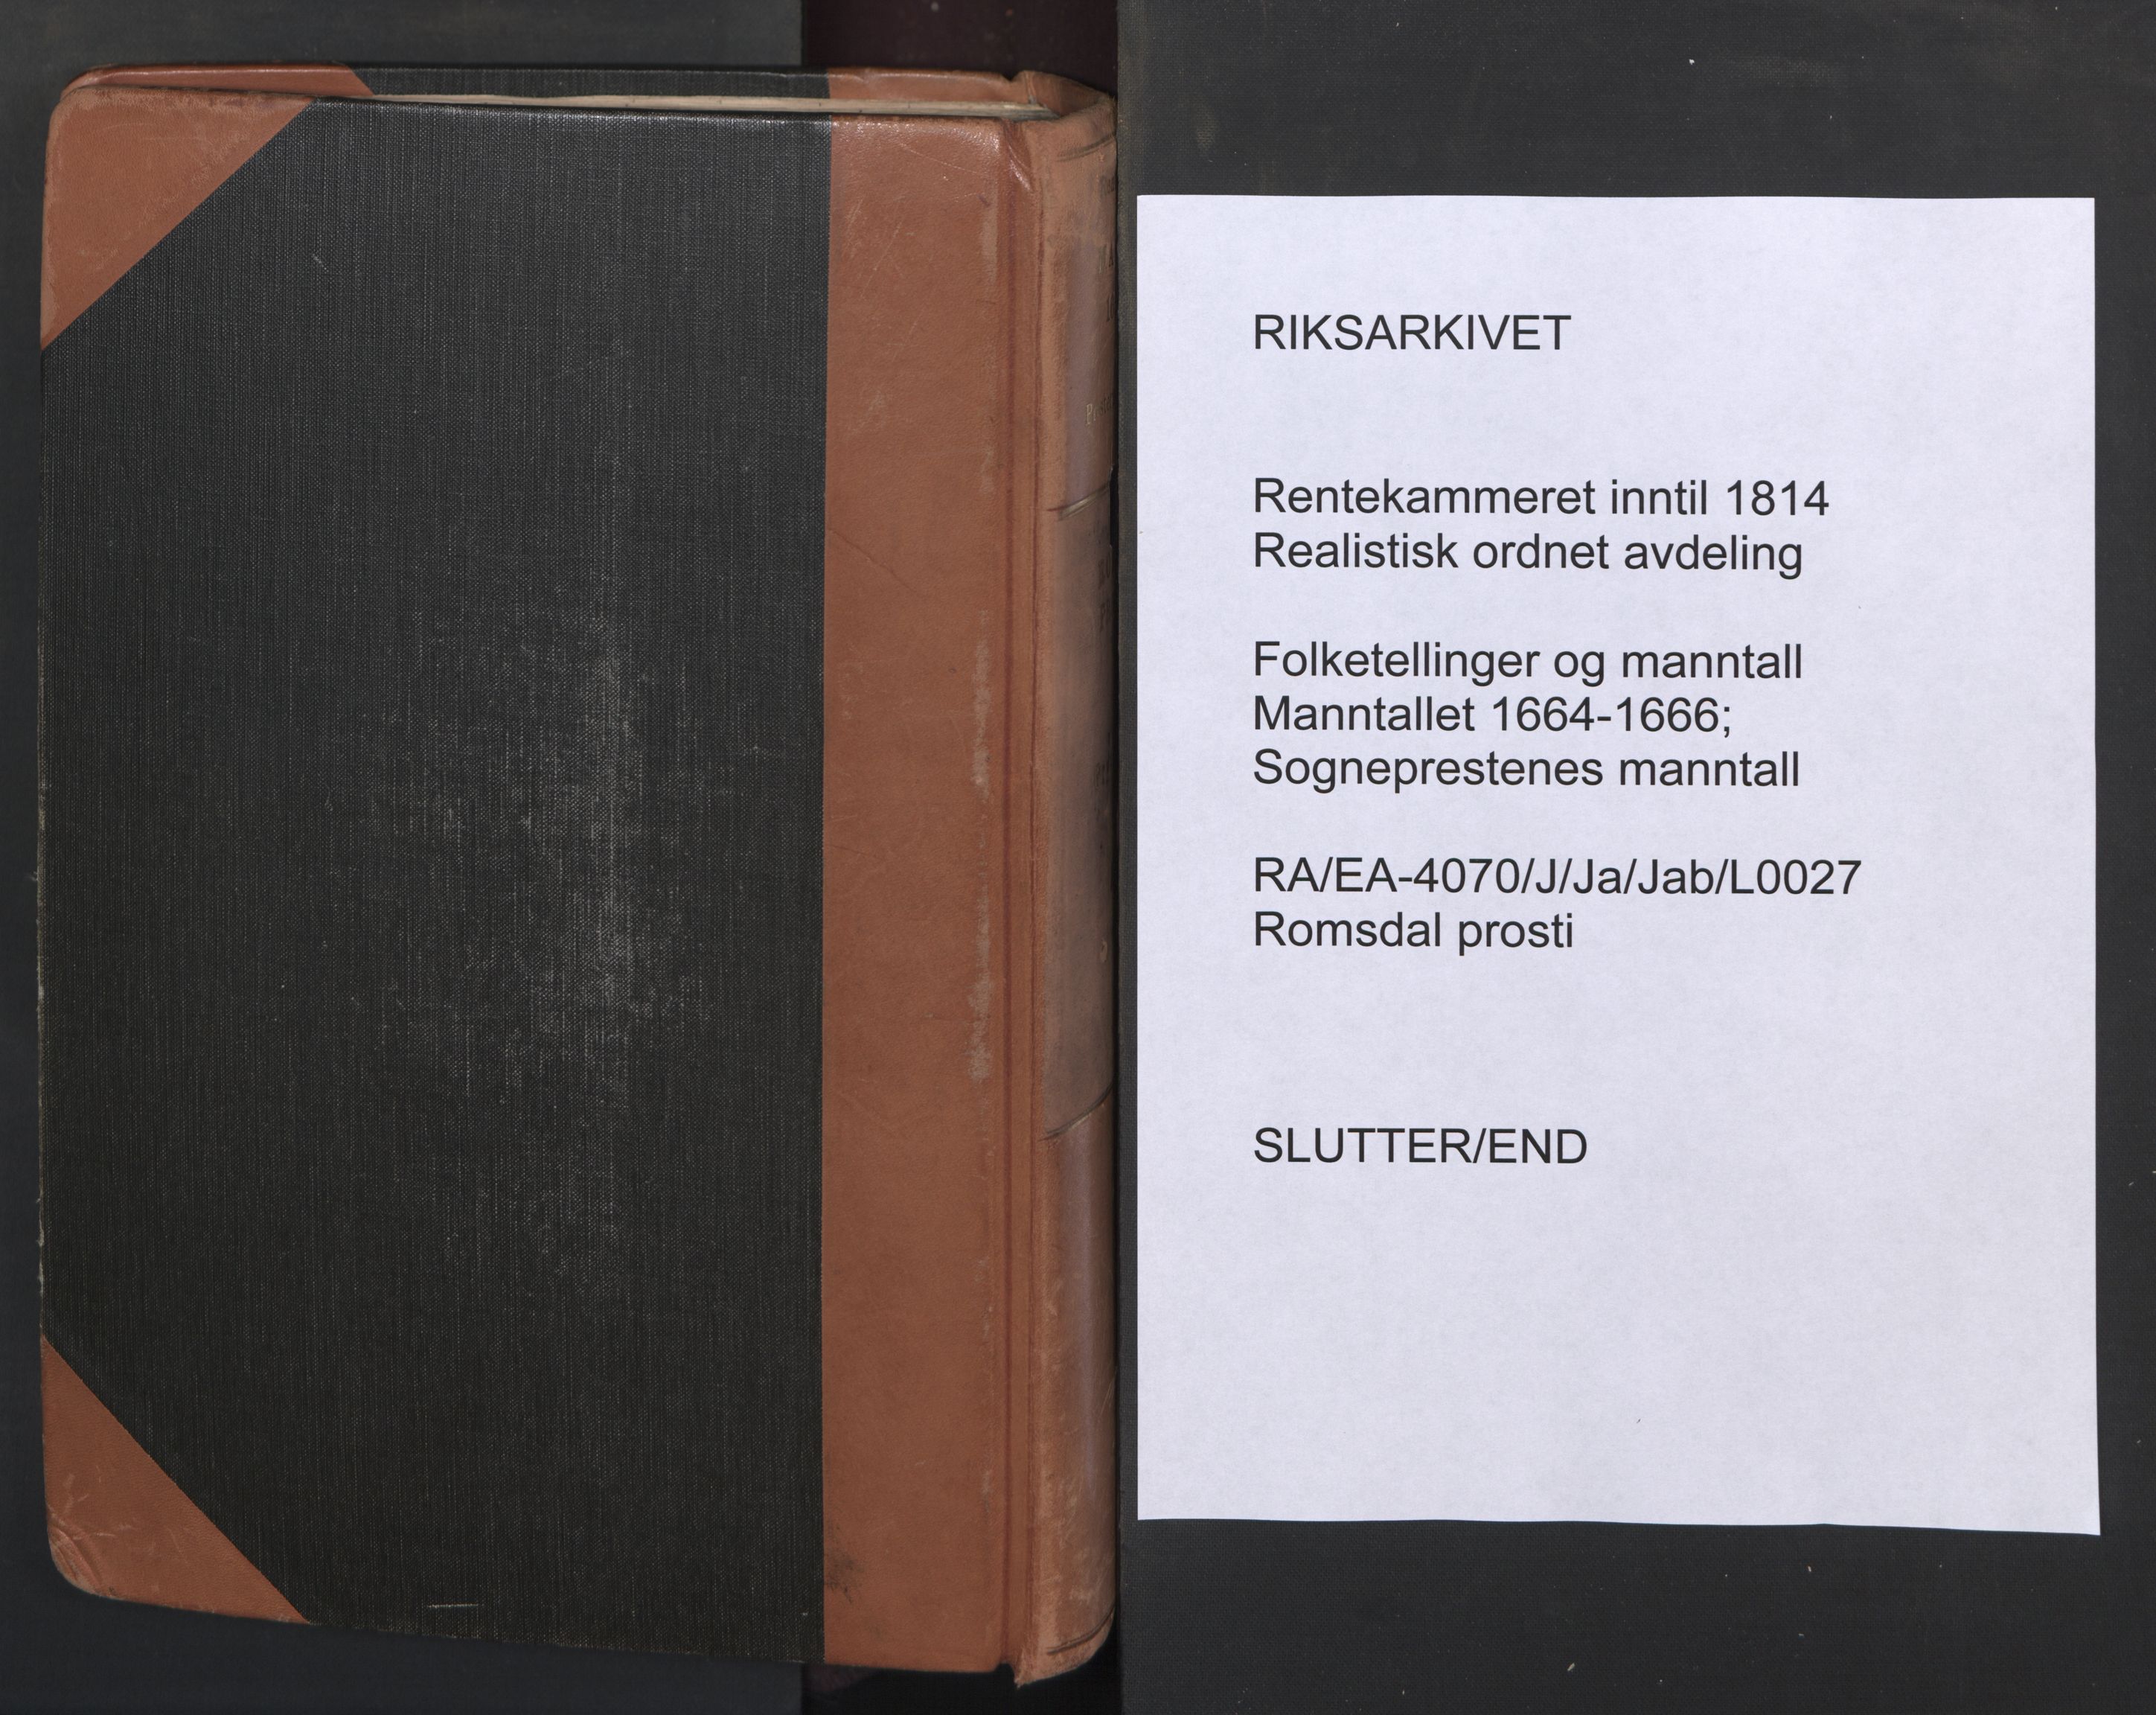 RA, Sogneprestenes manntall 1664-1666, nr. 27: Romsdal prosti, 1664-1666